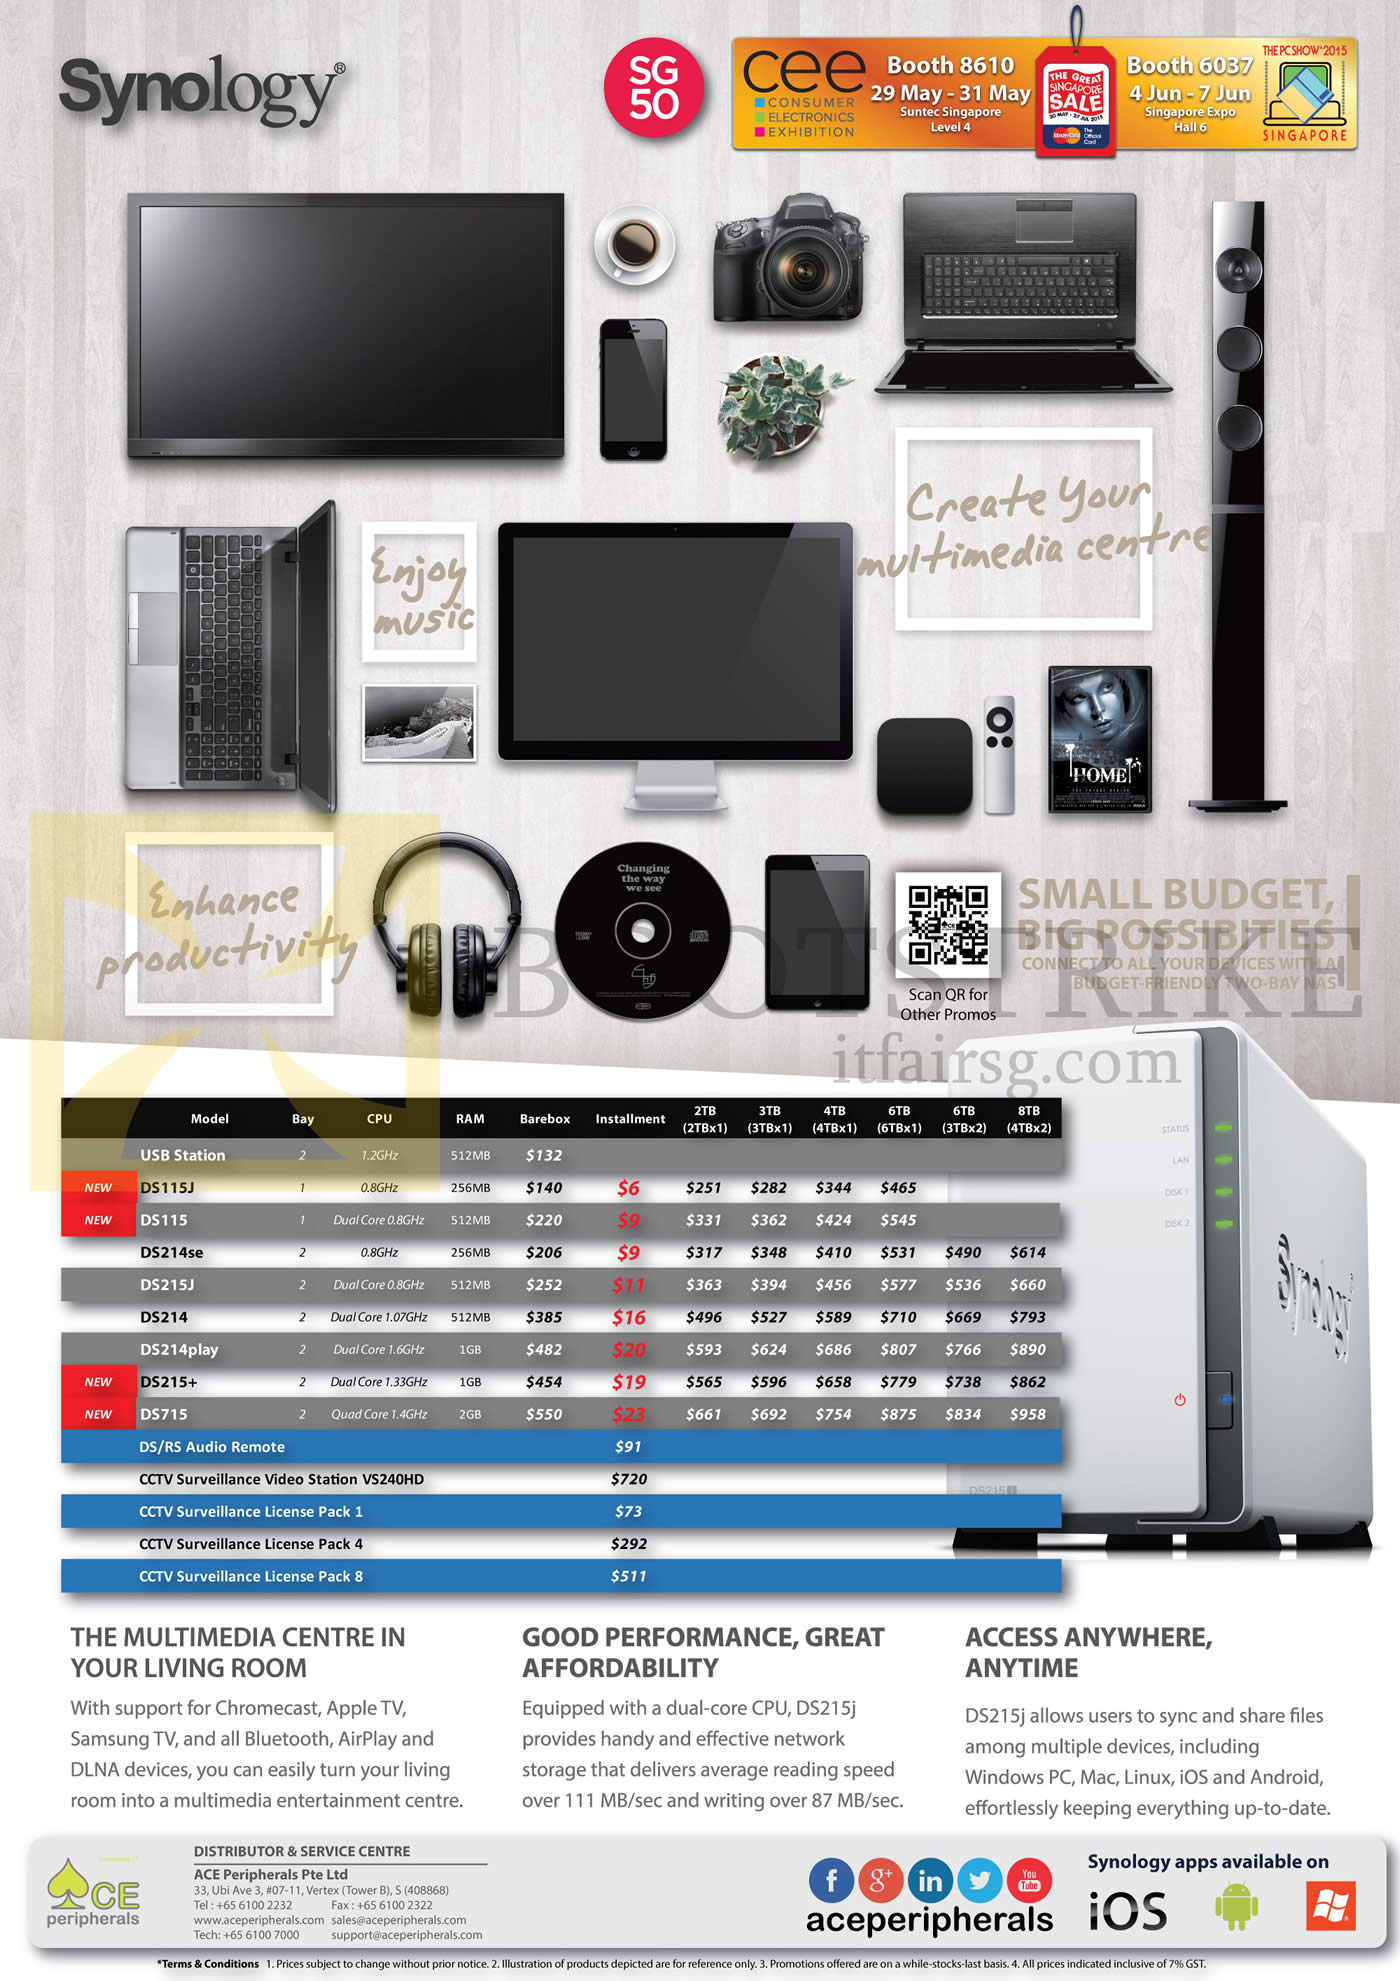 PC SHOW 2015 price list image brochure of Ace Peripherals Synology DS115 DS115J DS214se DS215J DS214Plus DS214 DS214play DS713Plus CCTV License